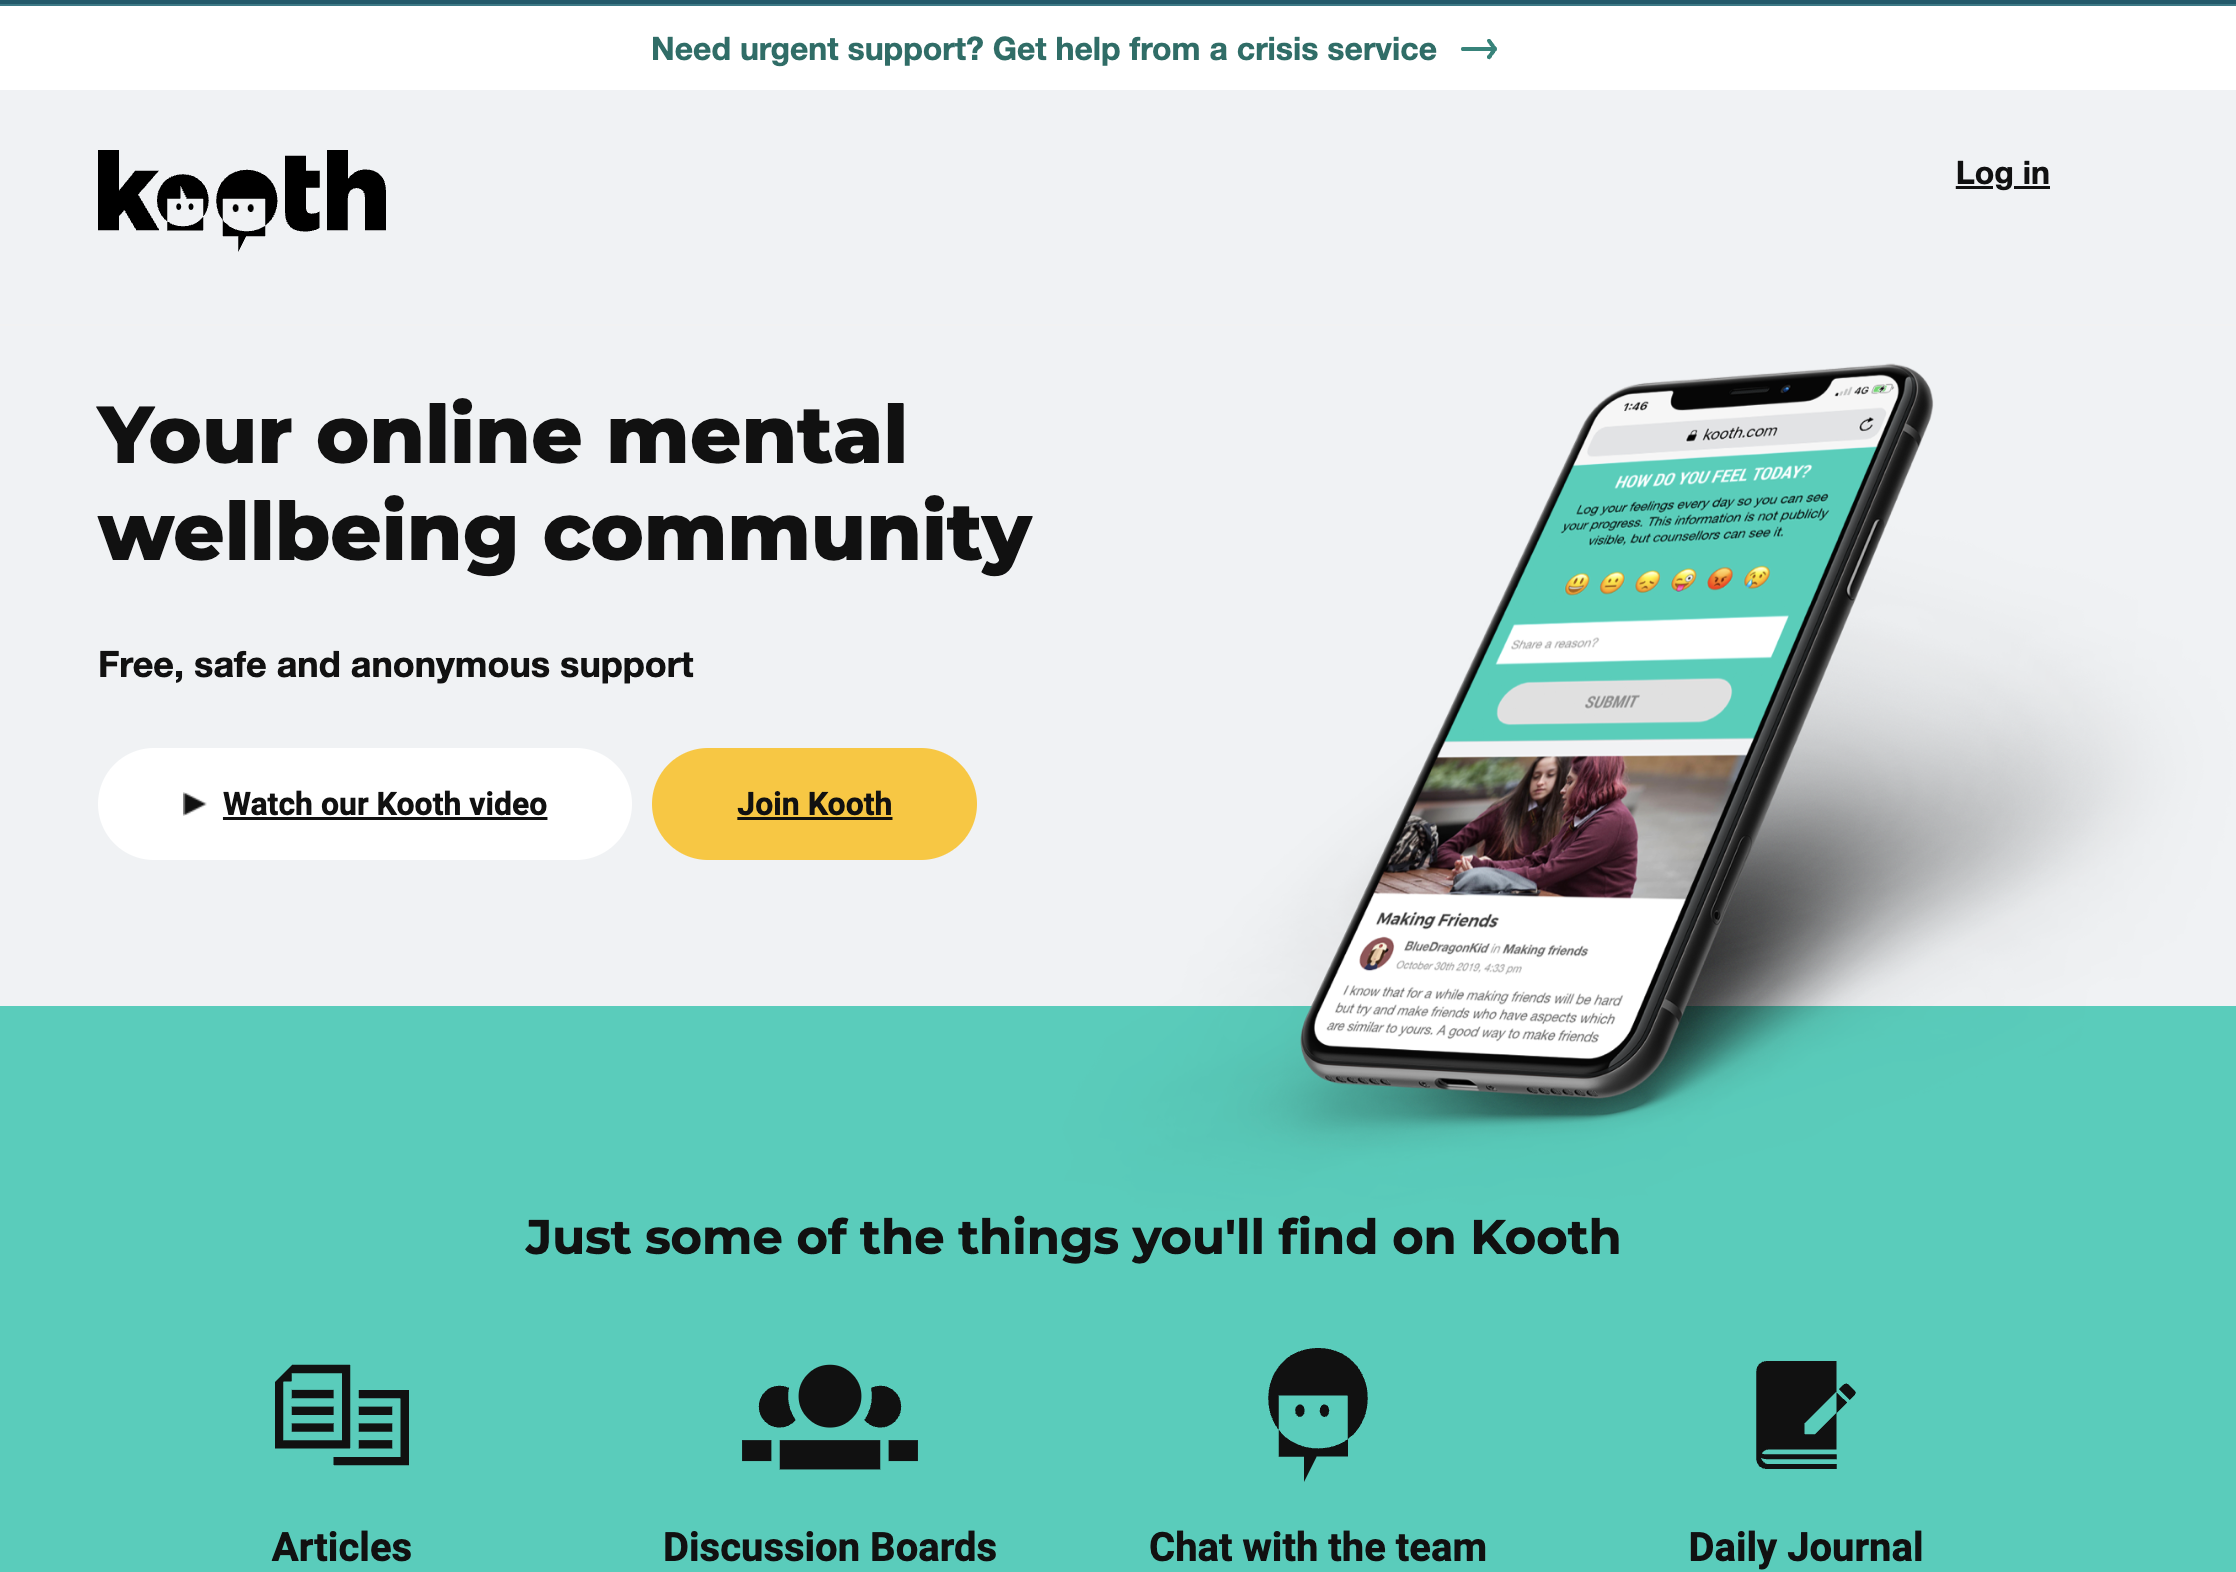 Your online mental wellbeing community website